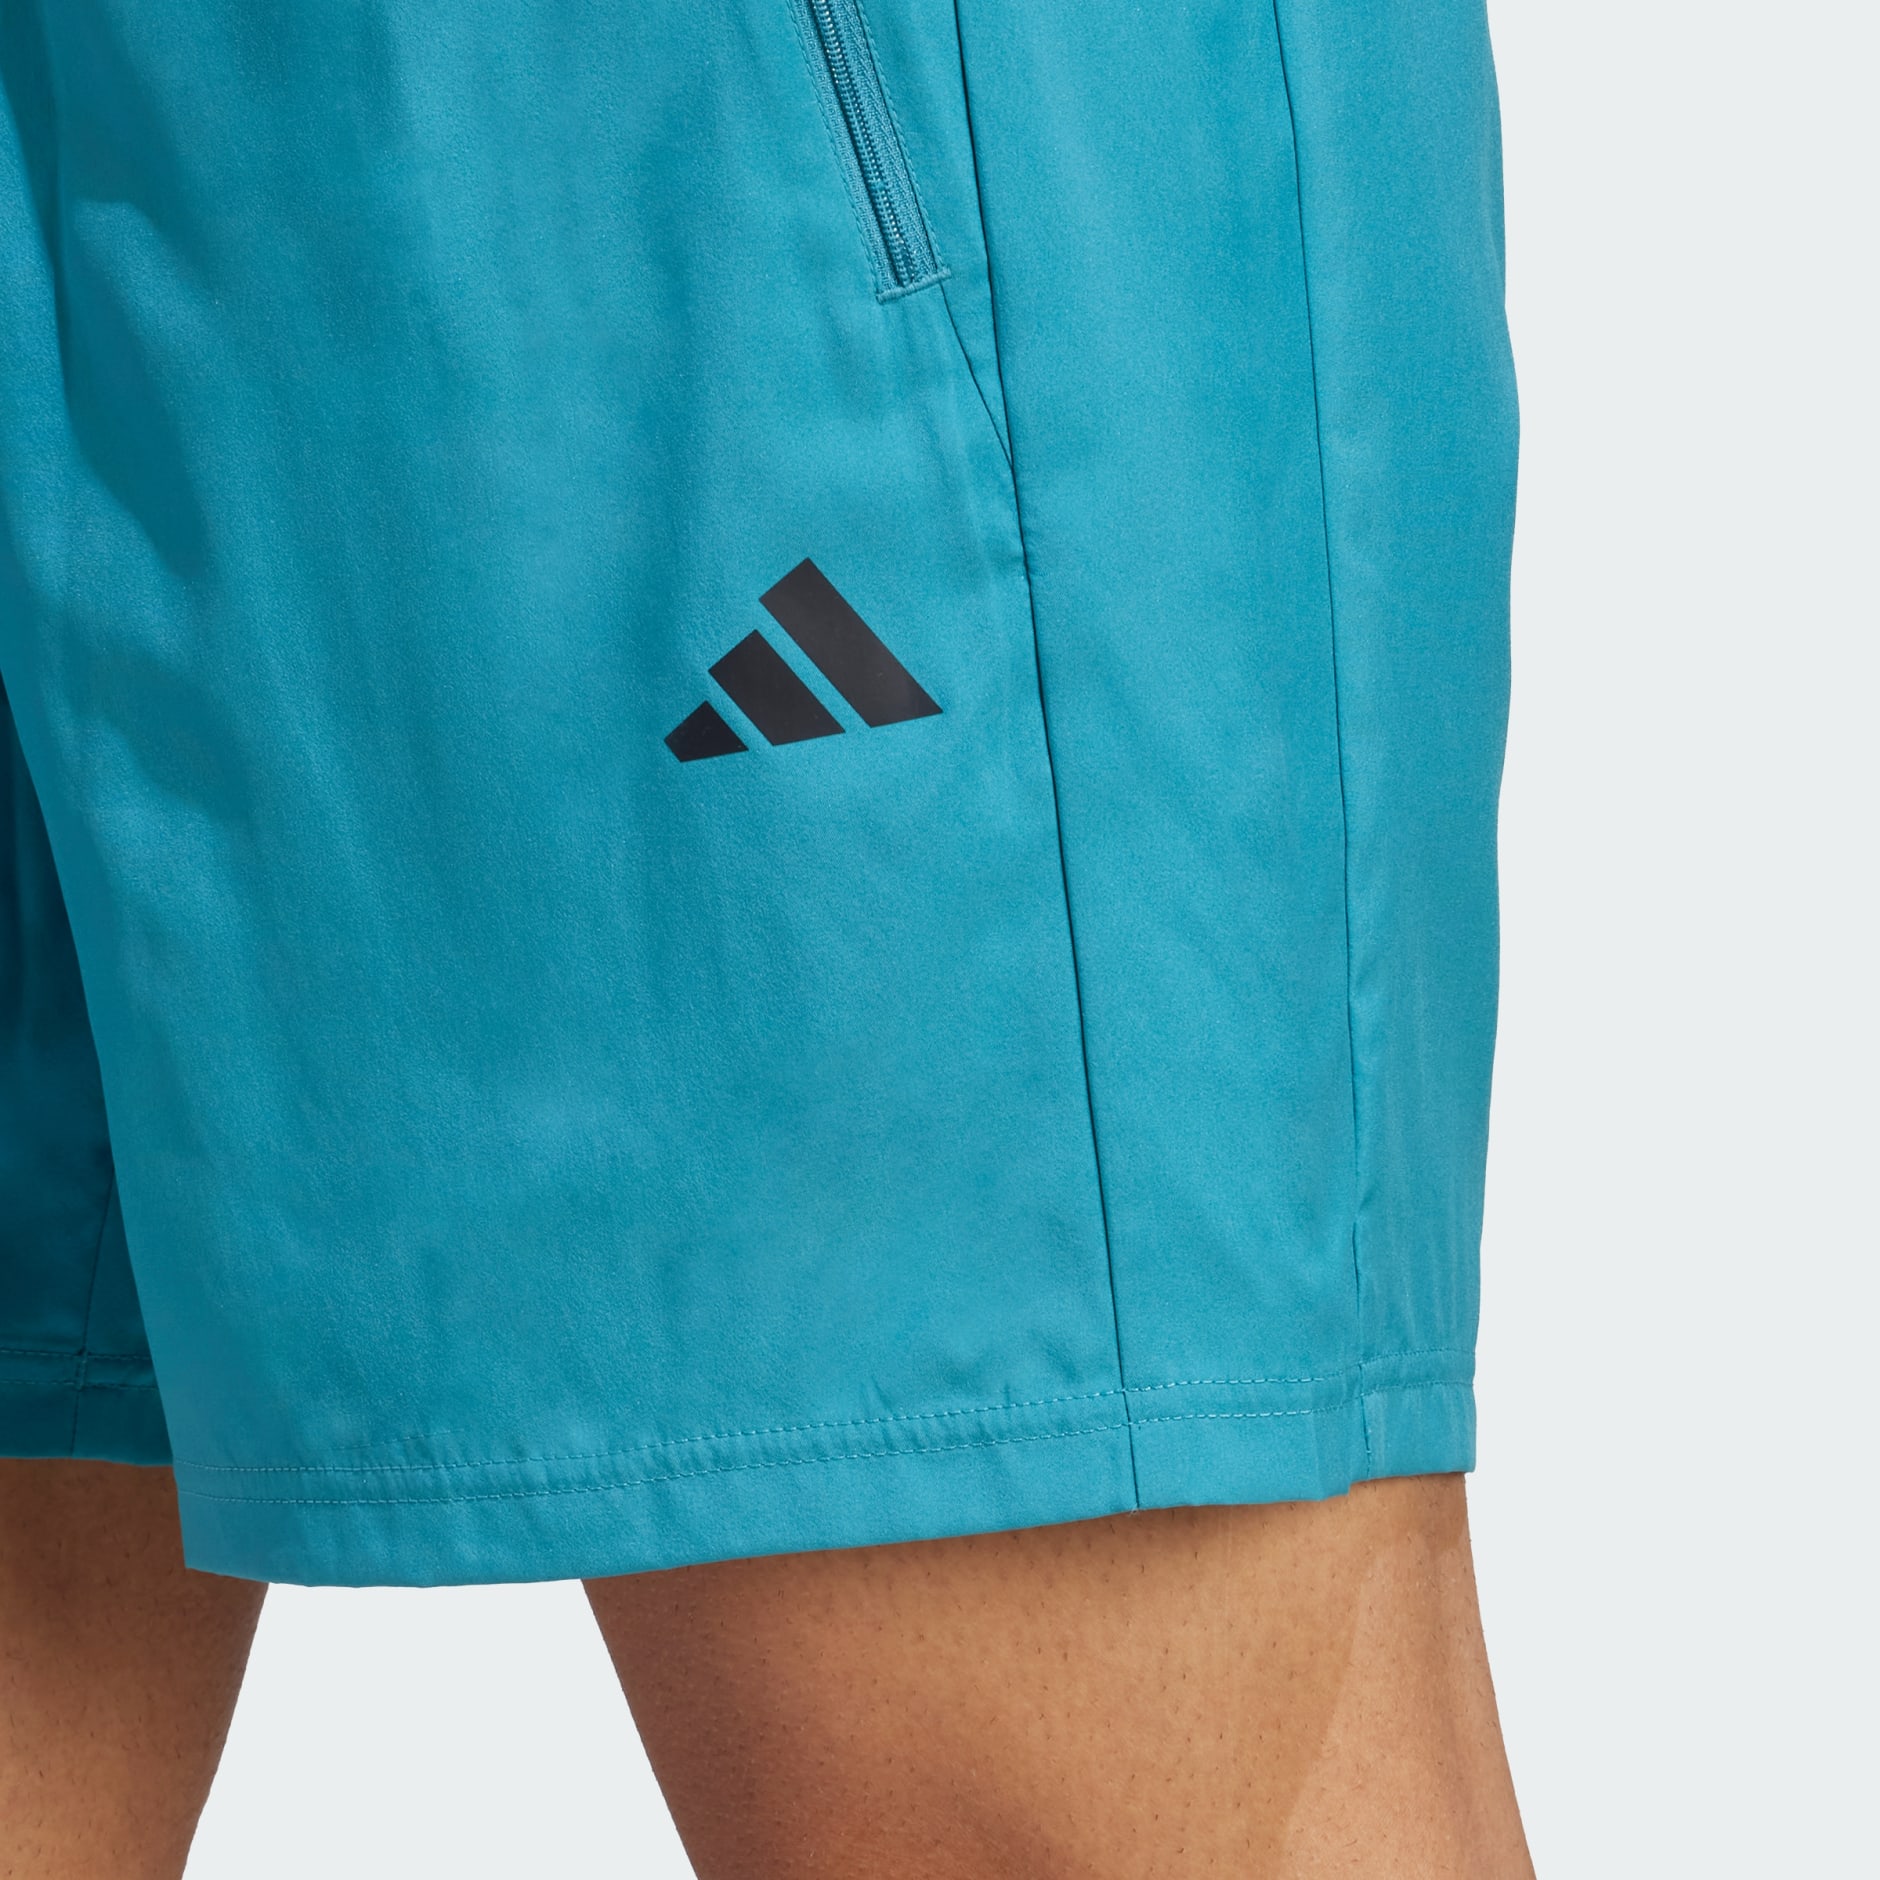 Clothing - Train Essentials Woven Training Shorts - Turquoise | adidas ...